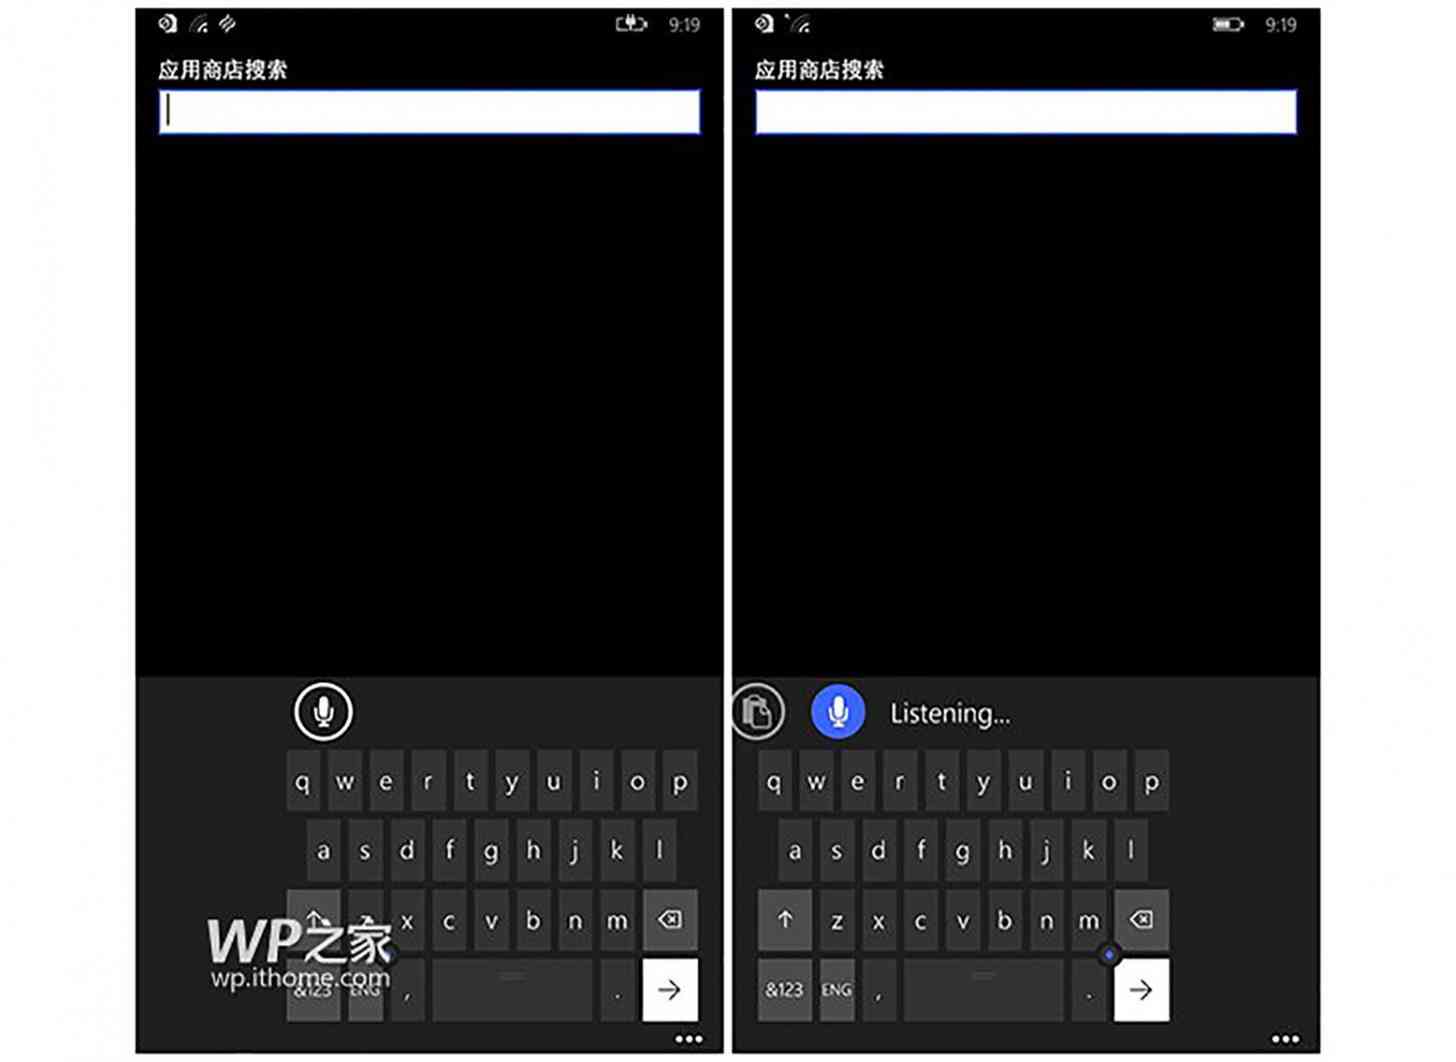 Windows 10 for phones keyboard screenshots leak